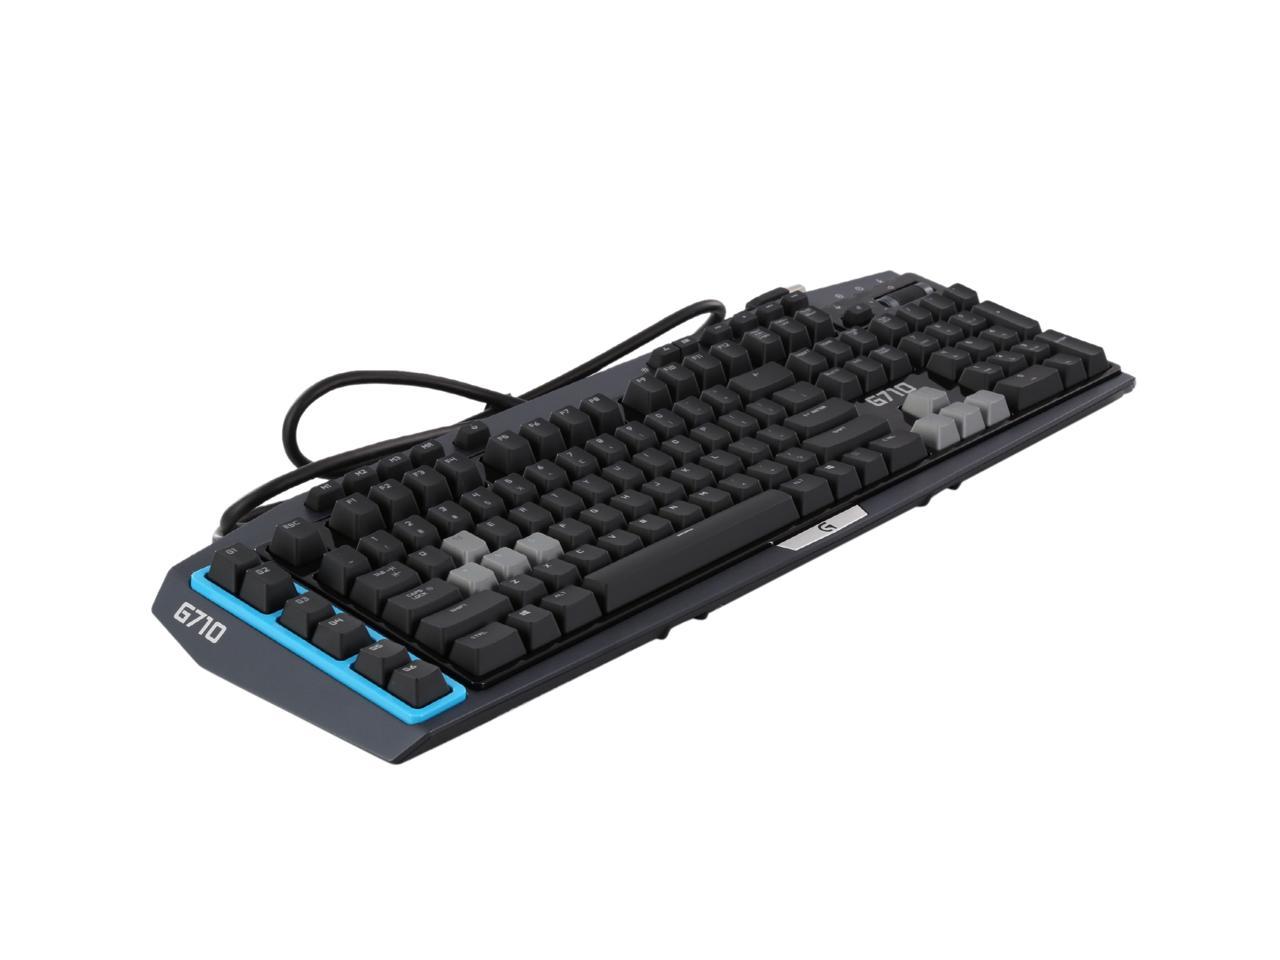 G710 Mechanical Keyboard - Newegg.com